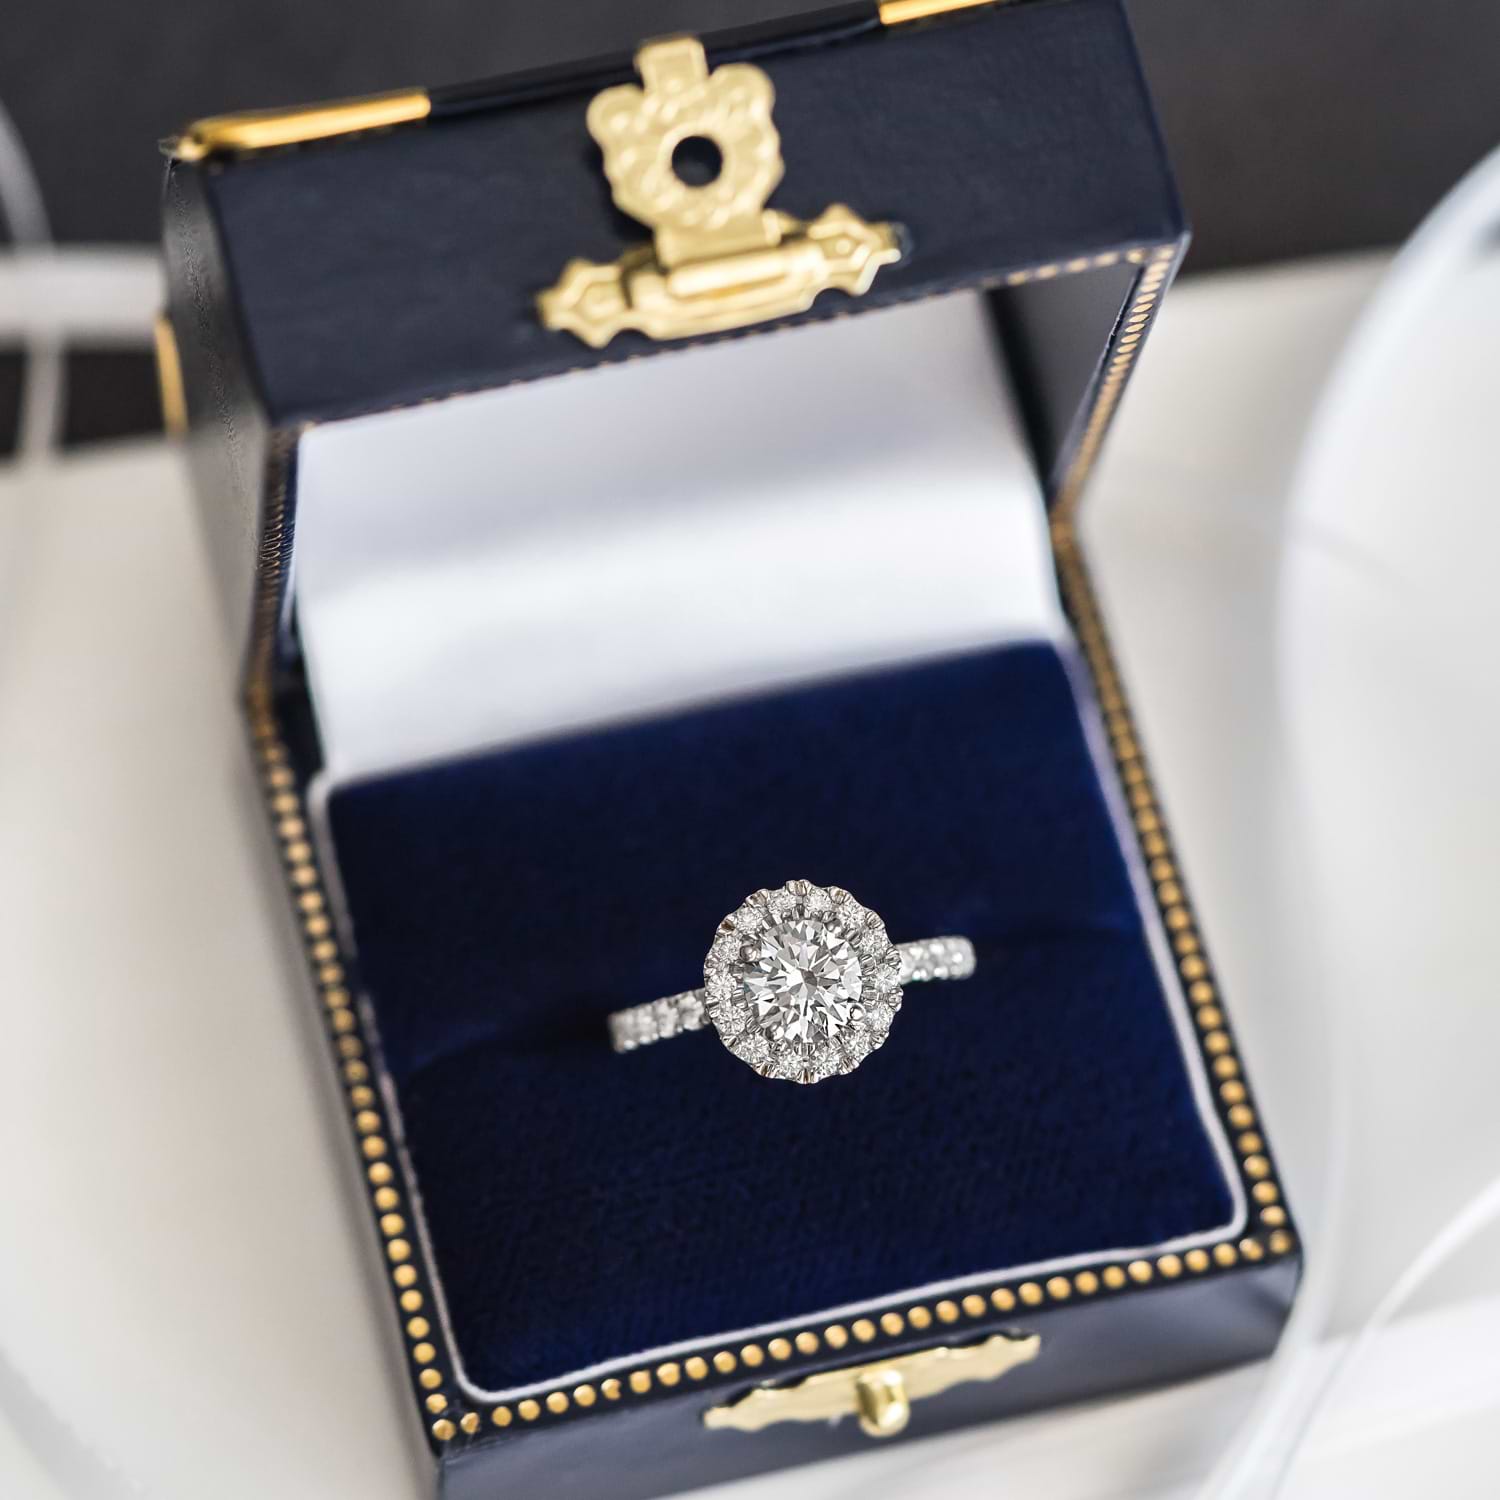 French Pave Halo Diamond Engagement Ring Setting Platinum 0.75ct